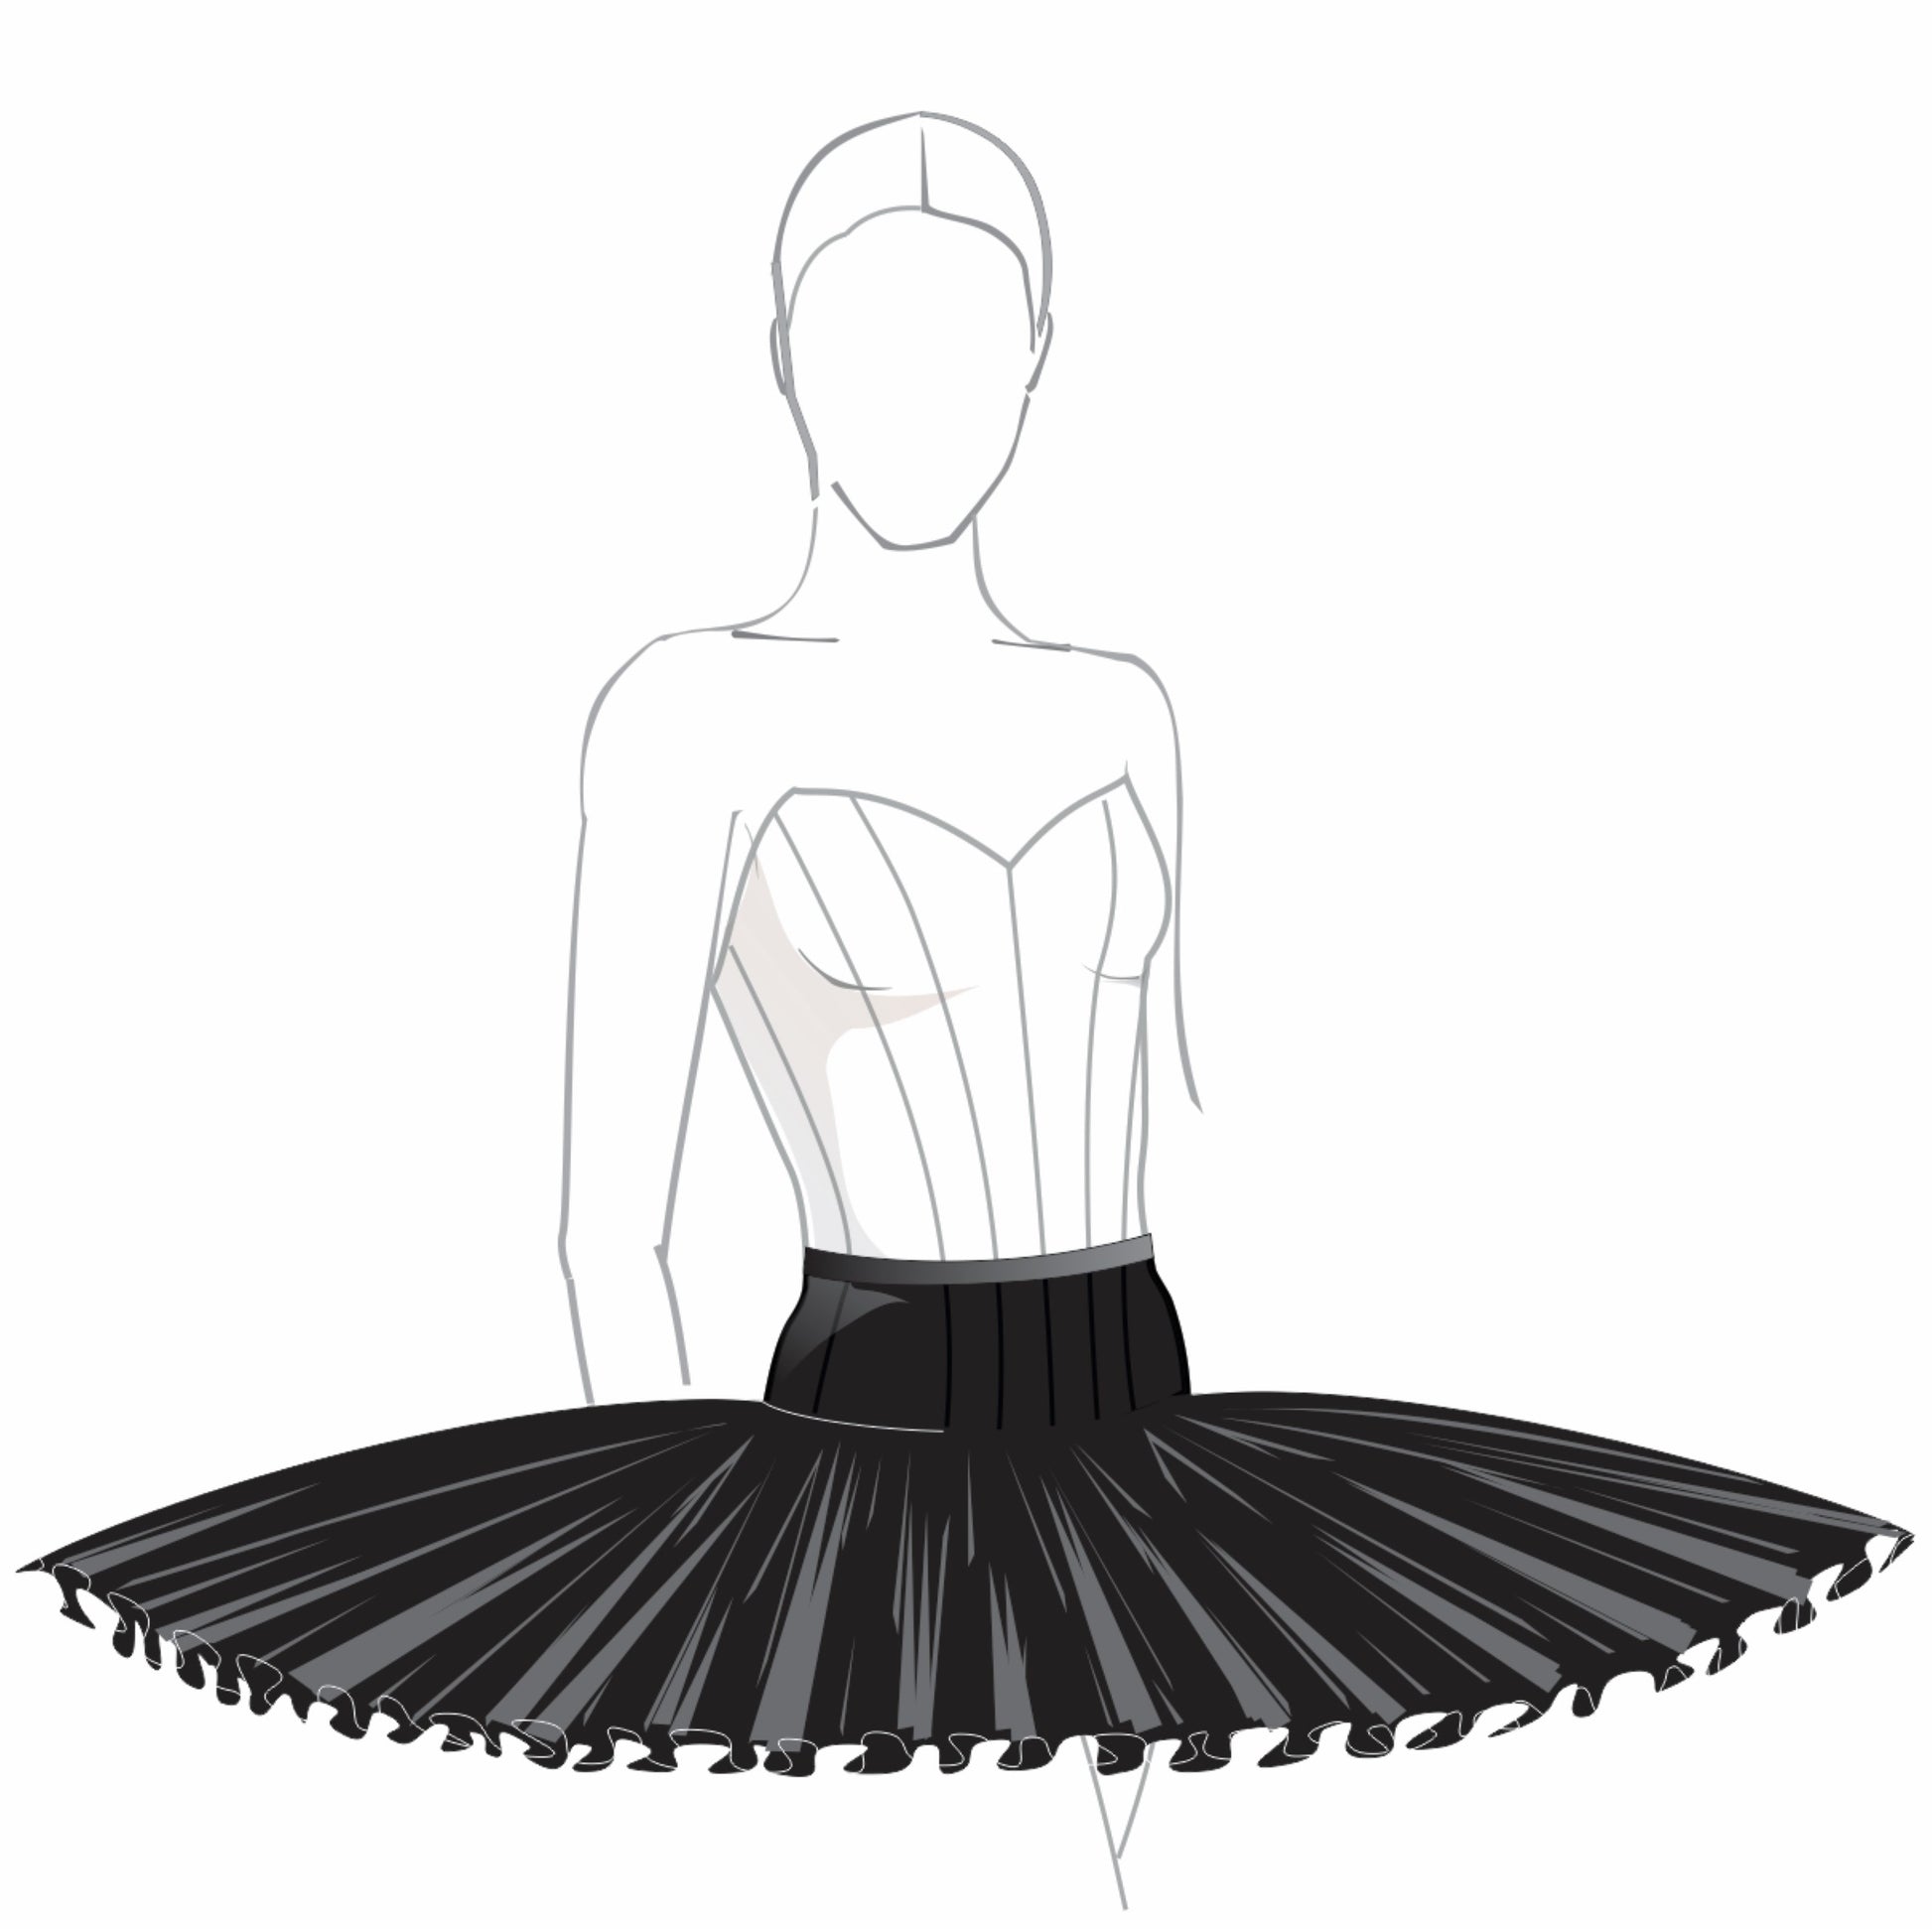 Semi stretch rehearsal tutu skirt pattern by Tutus That Dance